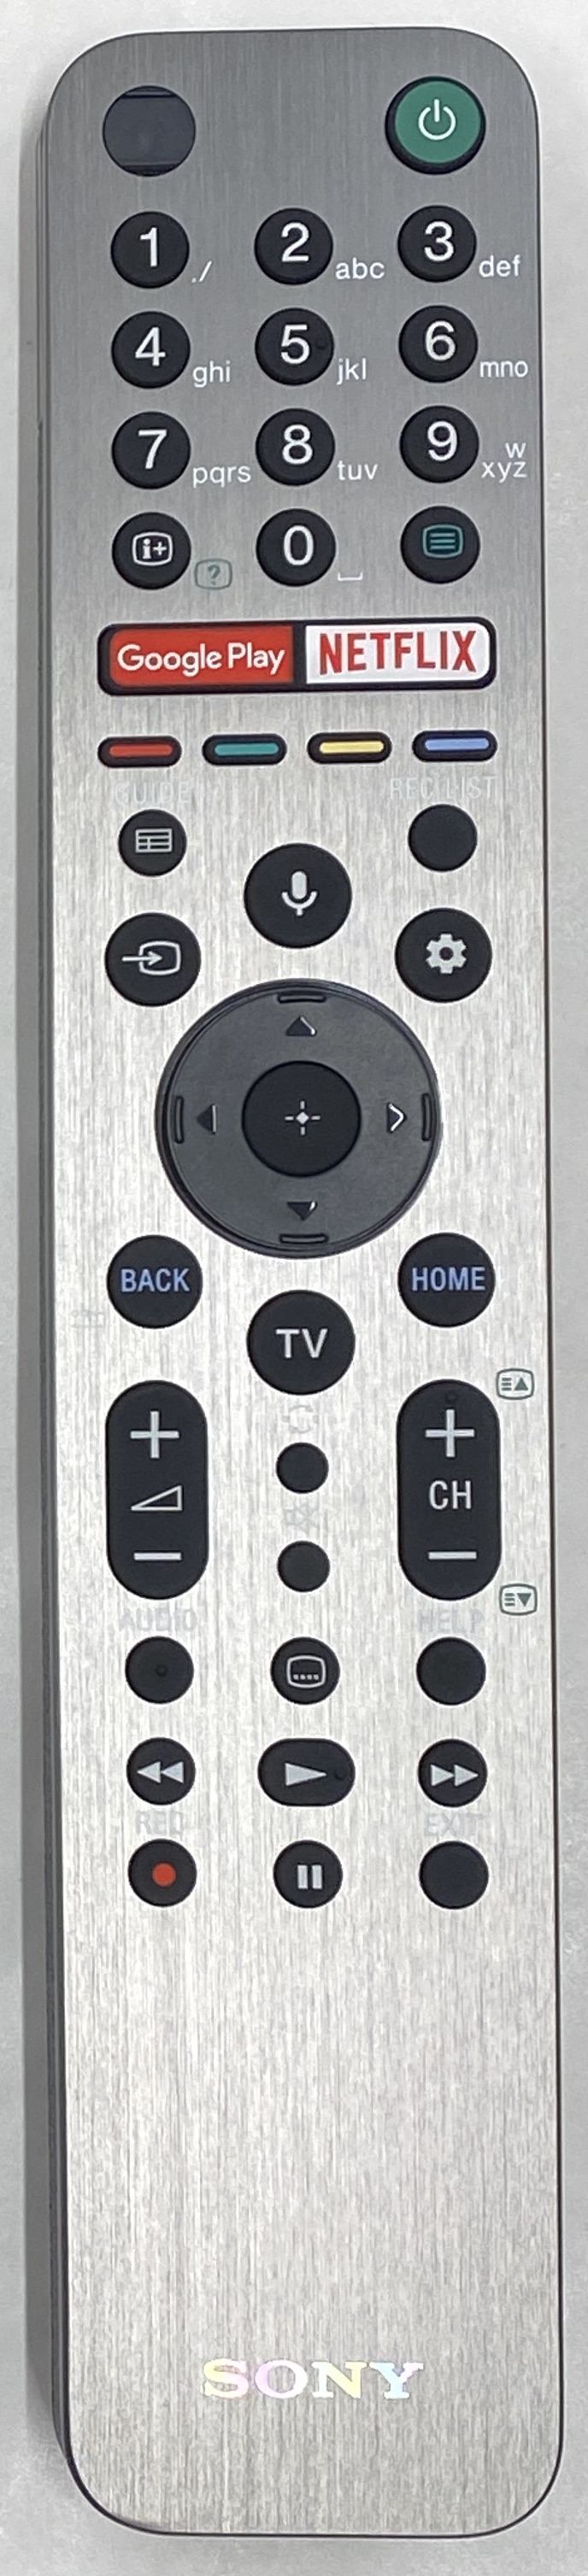 SONY 100504312 Remote Control Original